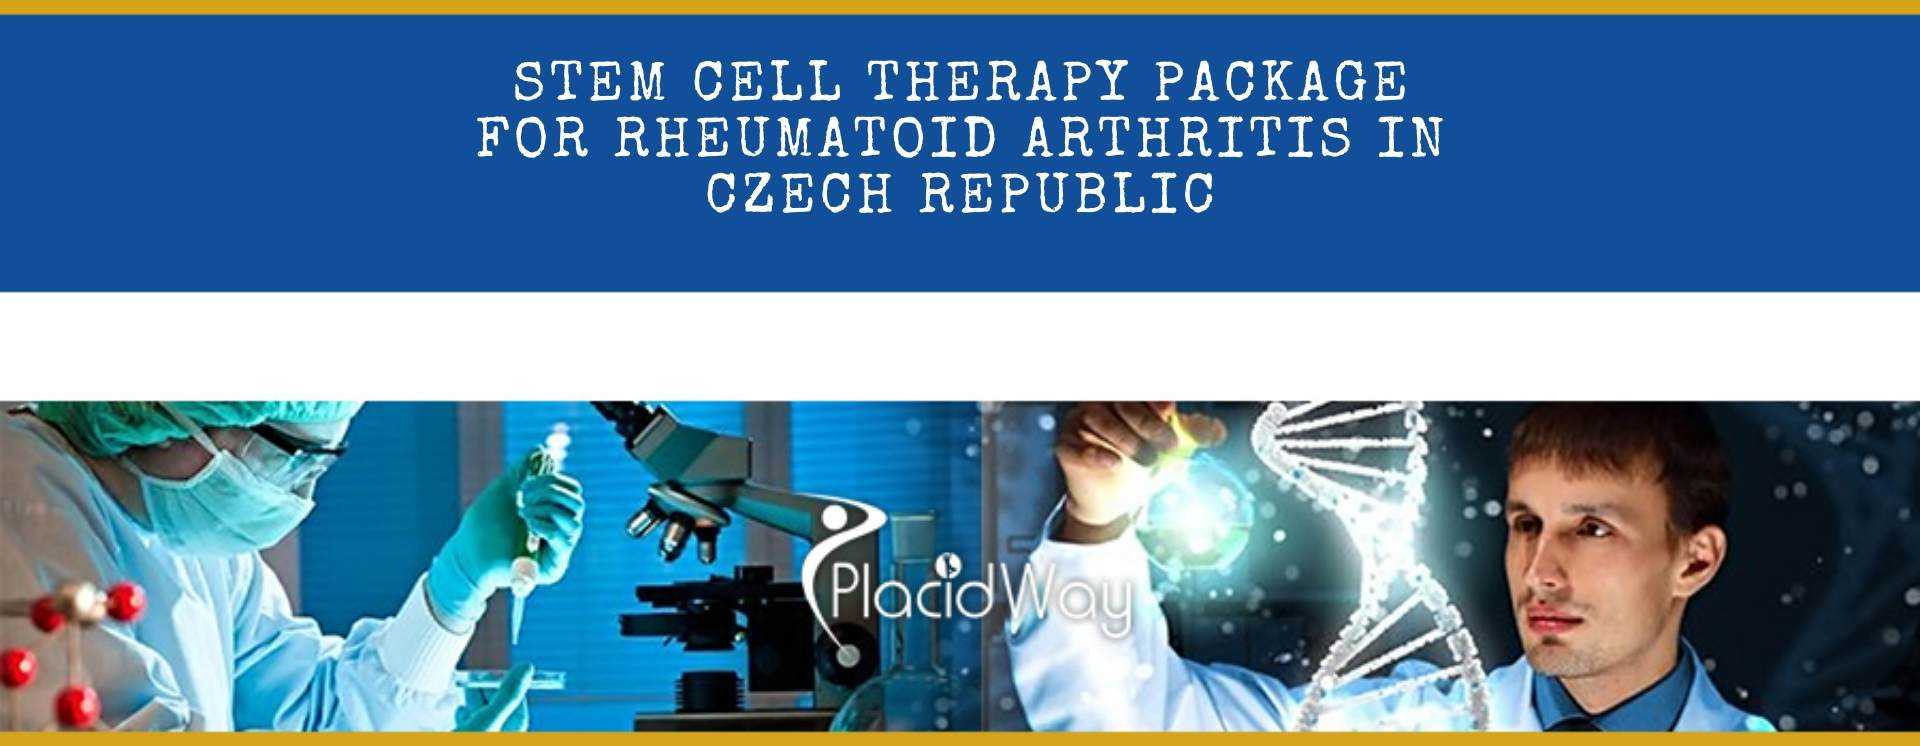 Stem Cell Therapy for Rheumatoid Arthritis in Czech Republic